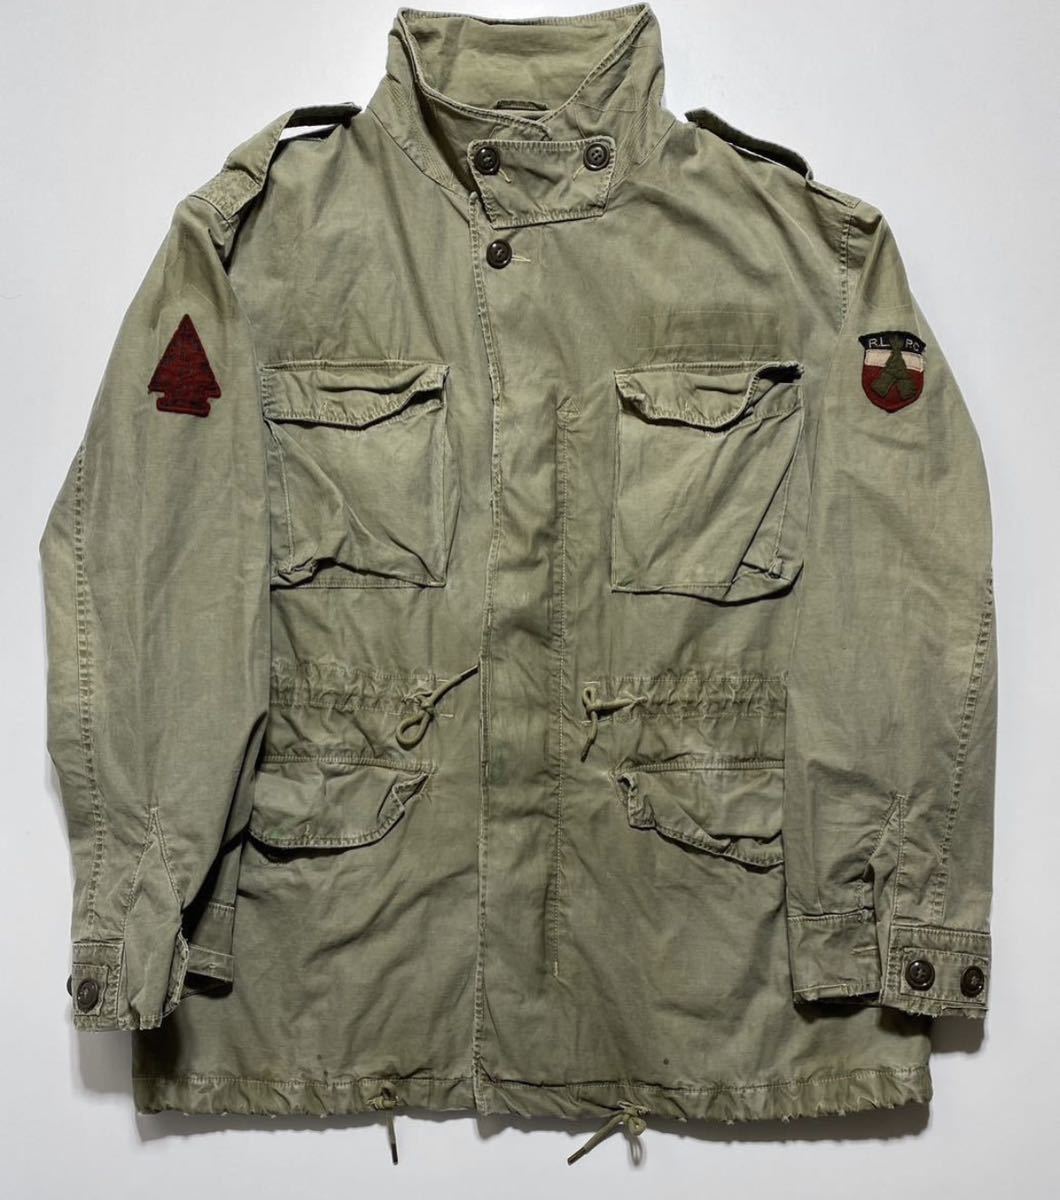 【XL】POLO Ralph Lauren Field Jacket ポロ ラルフローレン フィールドジャケット 長袖ジャケット MIL-J-4883A (MNBLOTWM5C00077) R2022